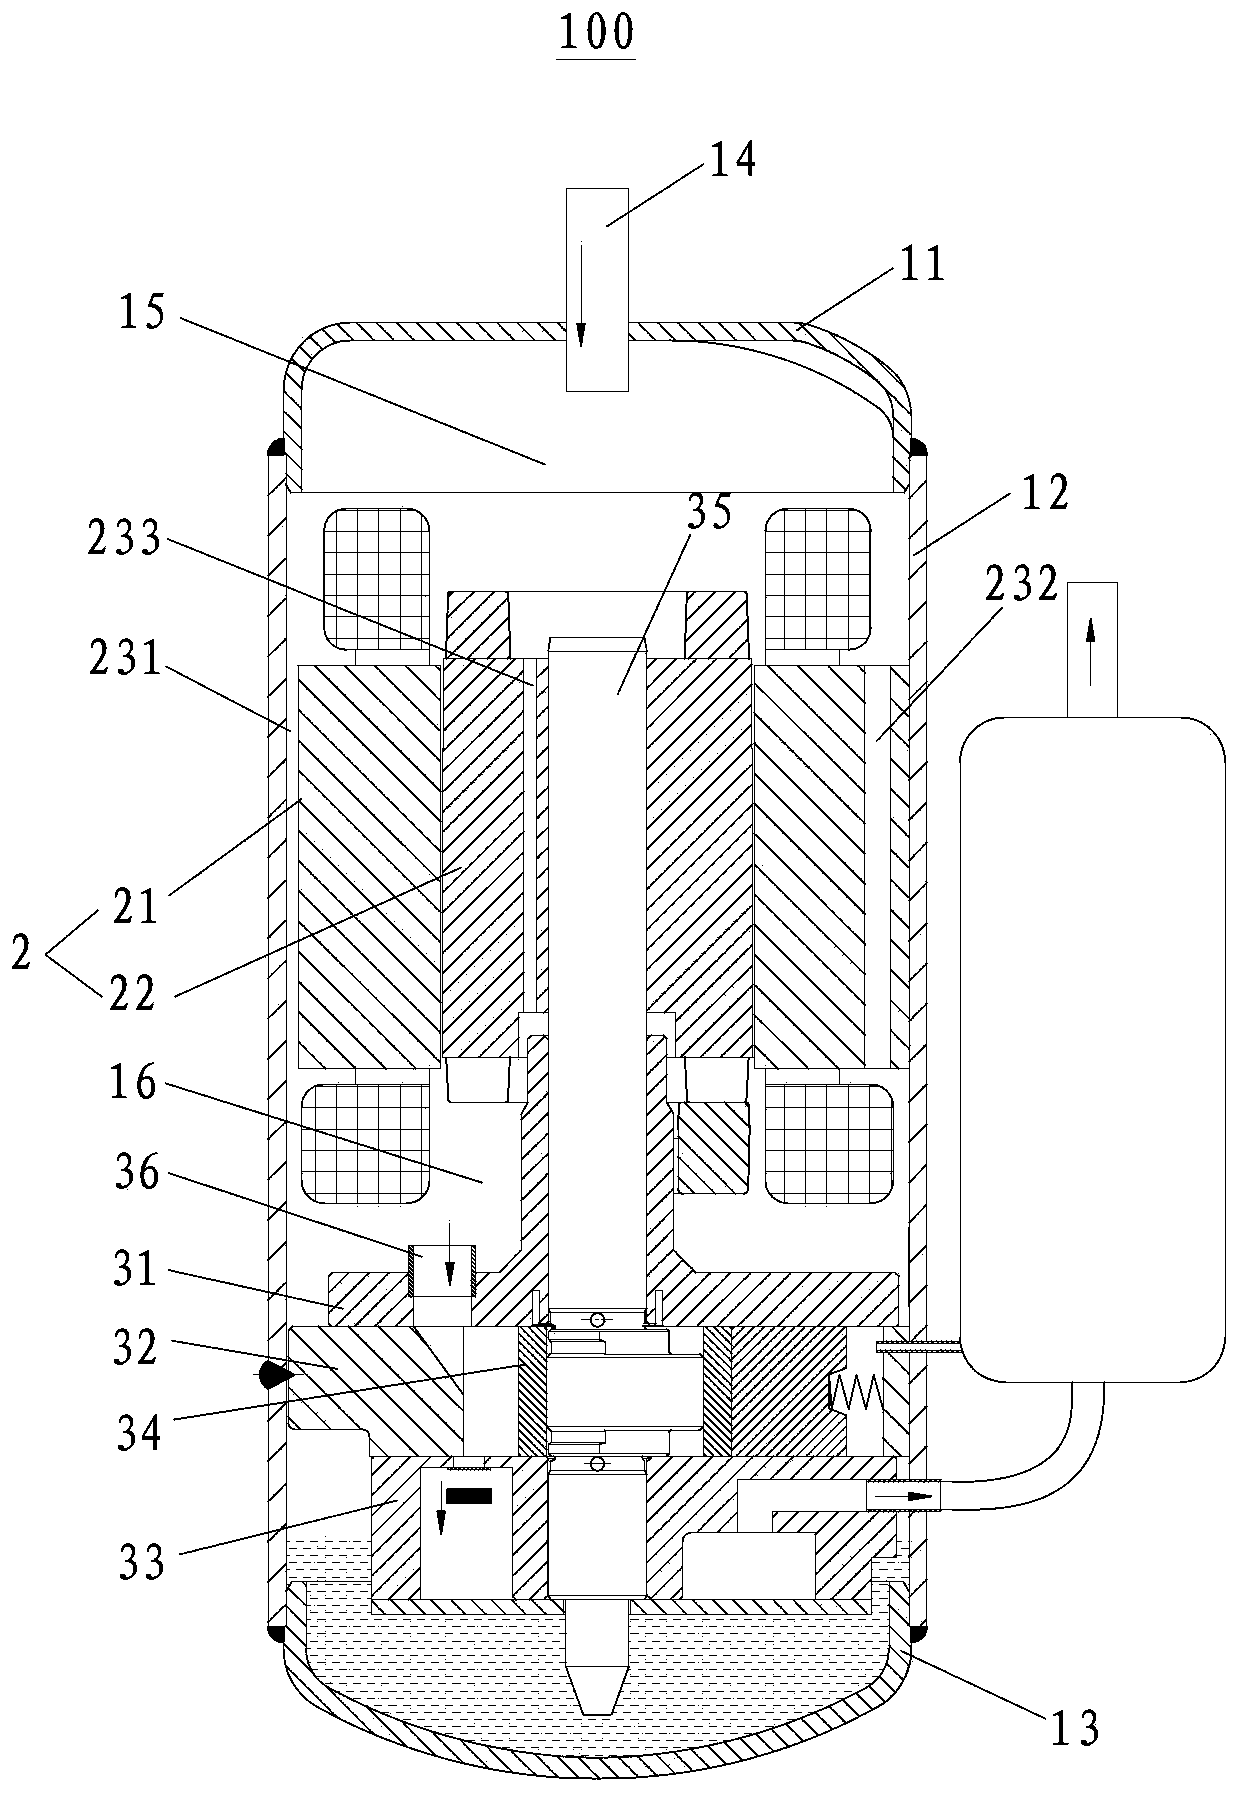 Low backpressure rotary compressor